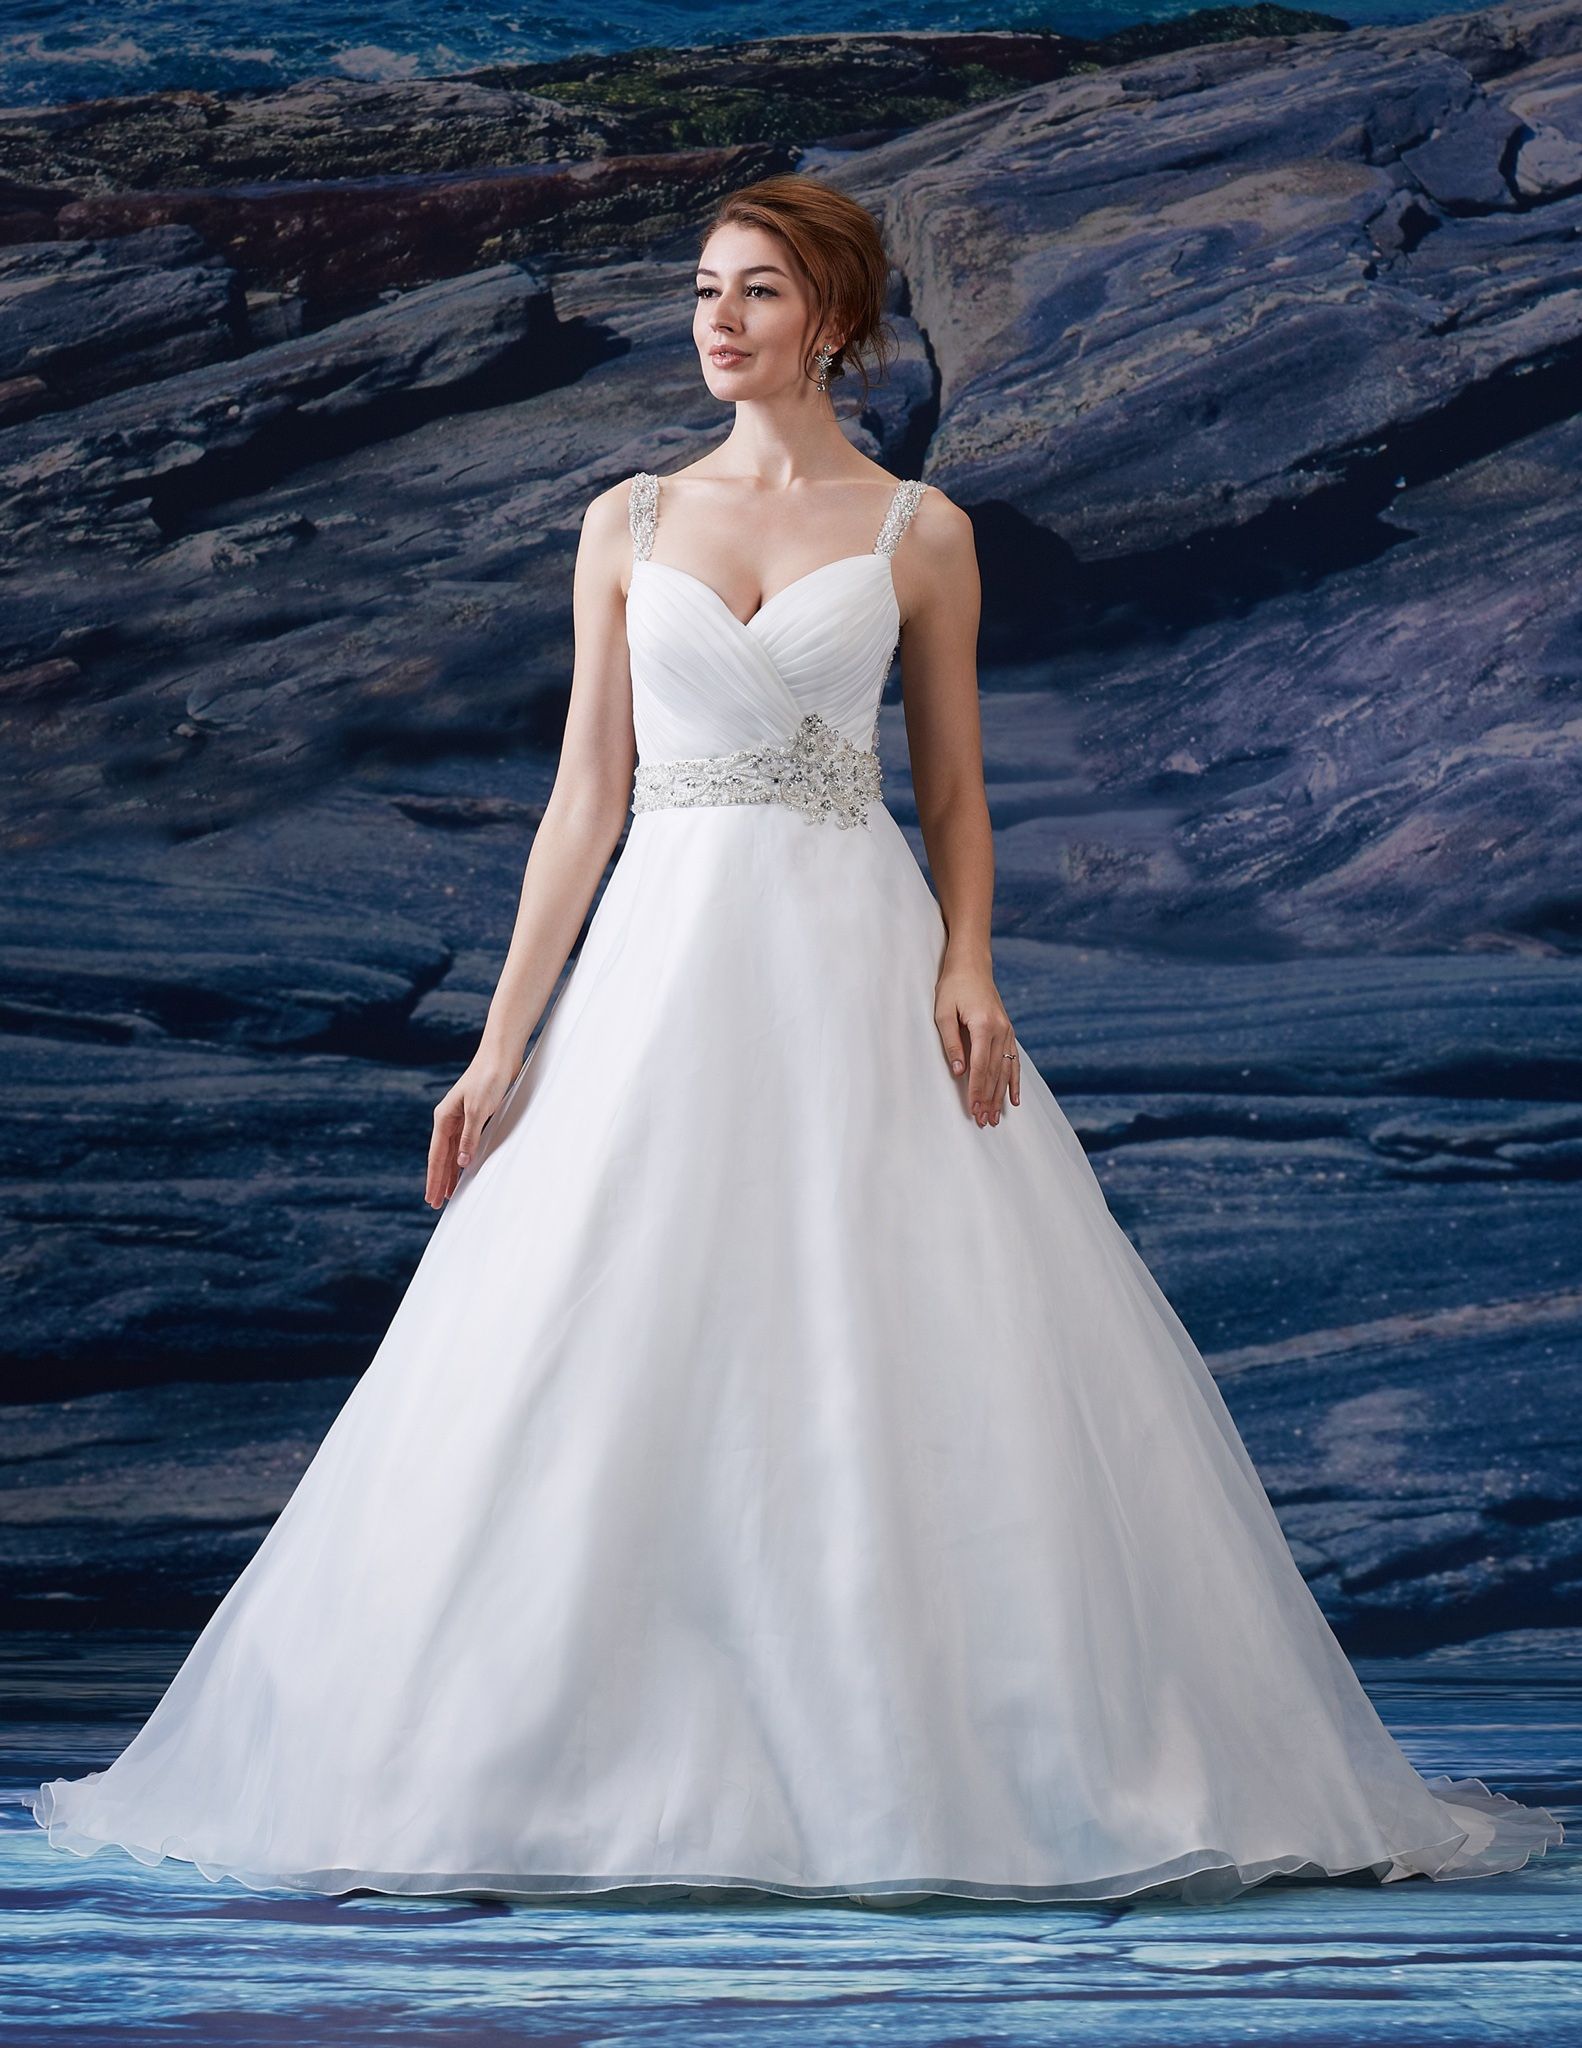 Venus  A7461 Modest Wedding Dress Size 12, White